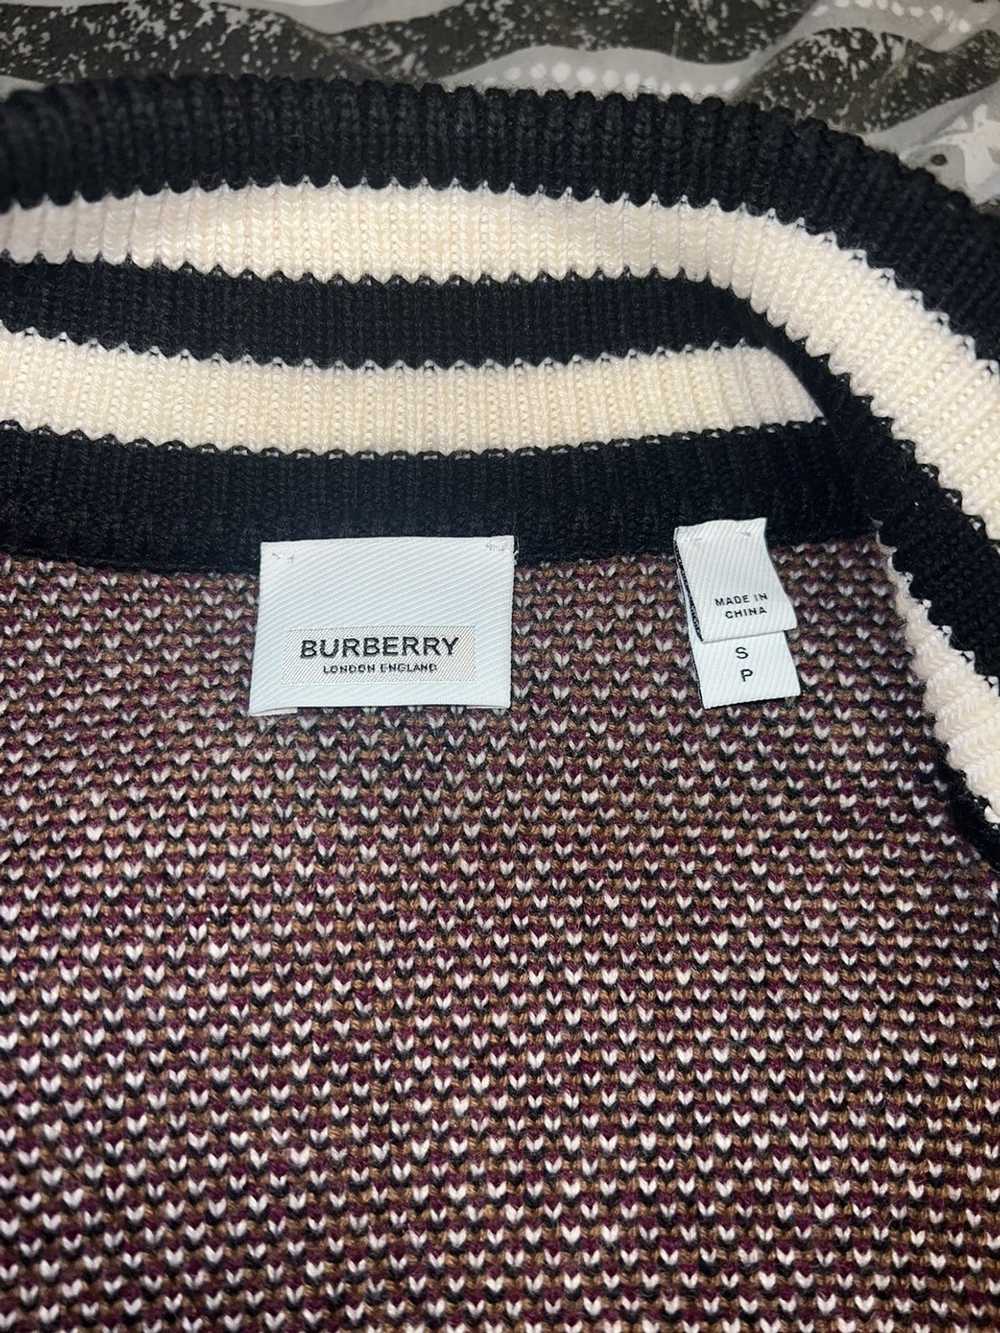 Burberry Burberry Cashmere Plaid Jacket - image 4